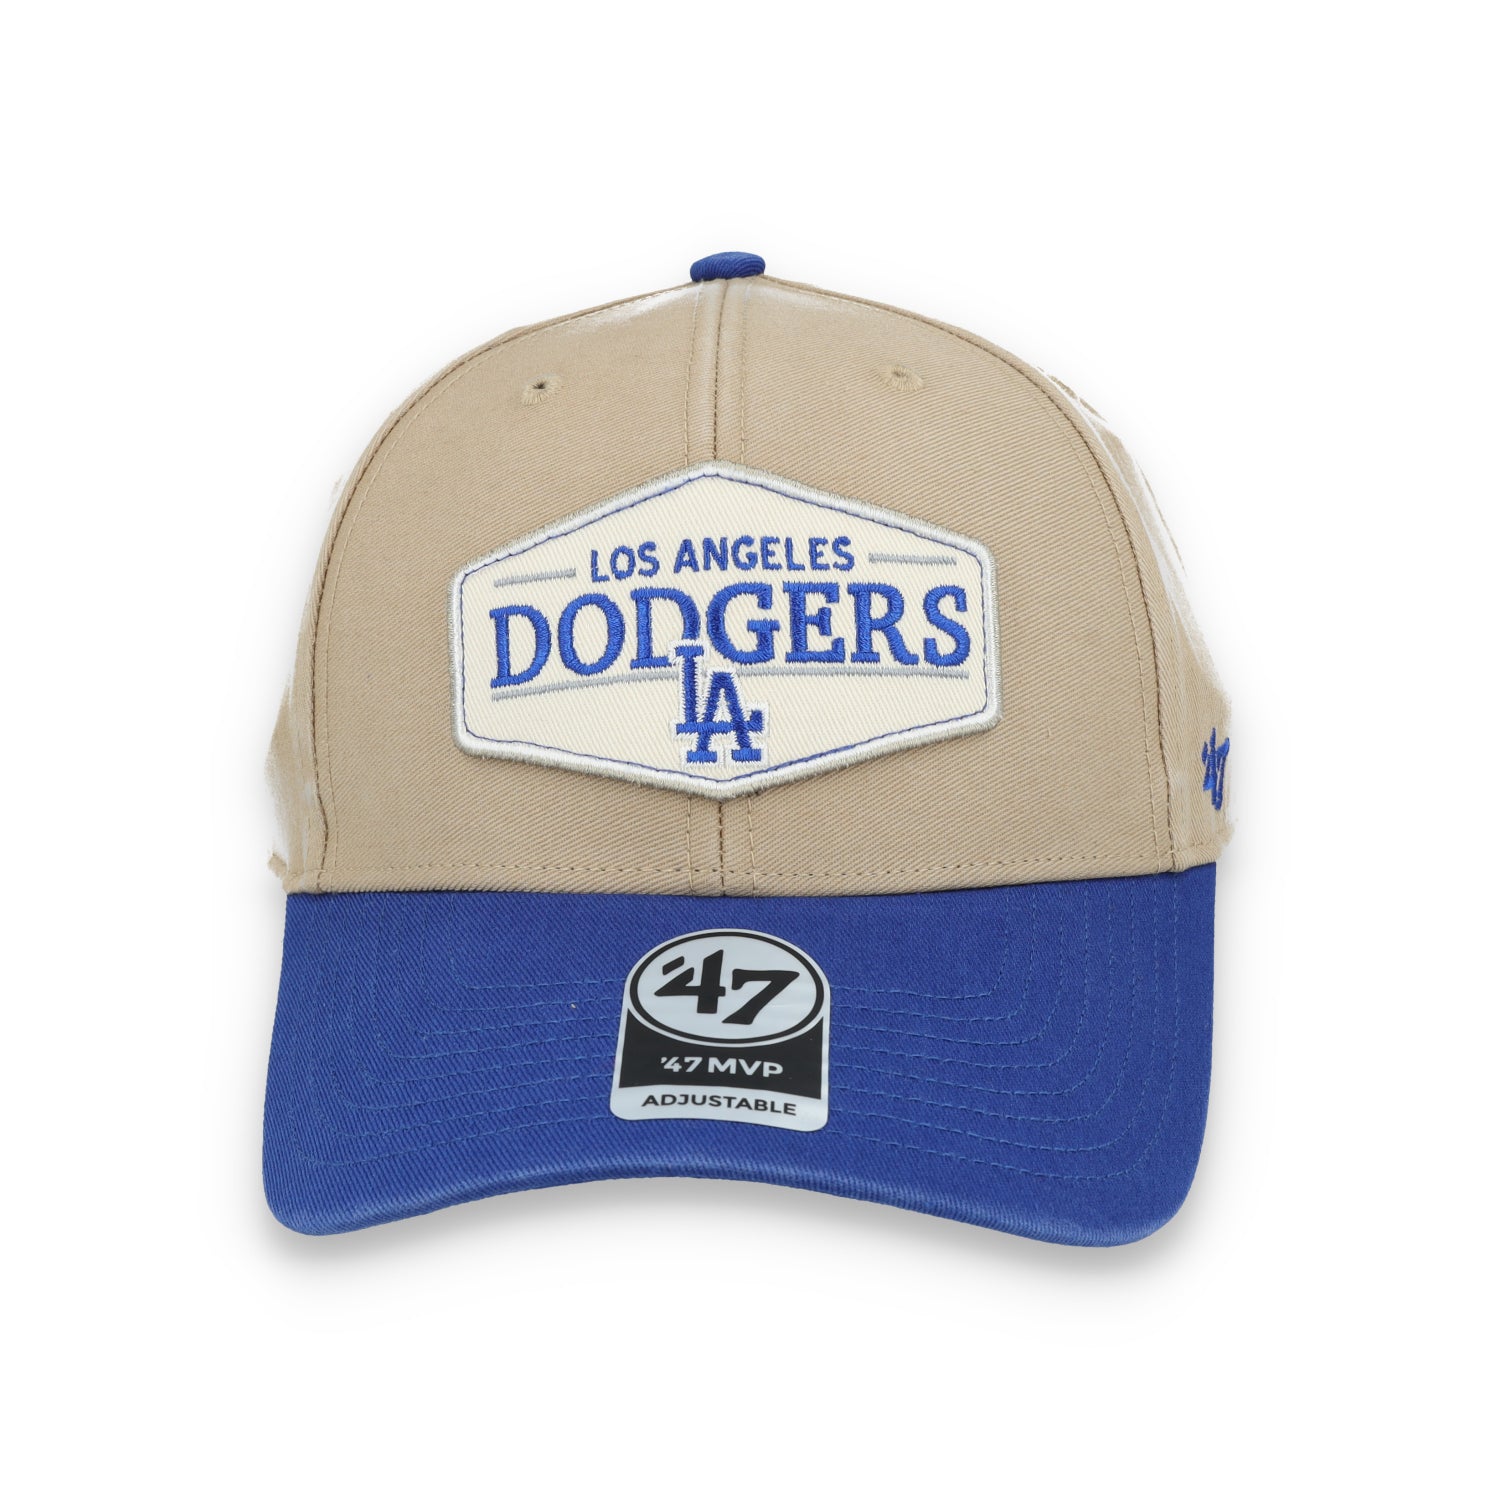 '47 BRAND LOS ANGELES DODGERS ANDOVER '47 MVP ADJUSTABLE HAT